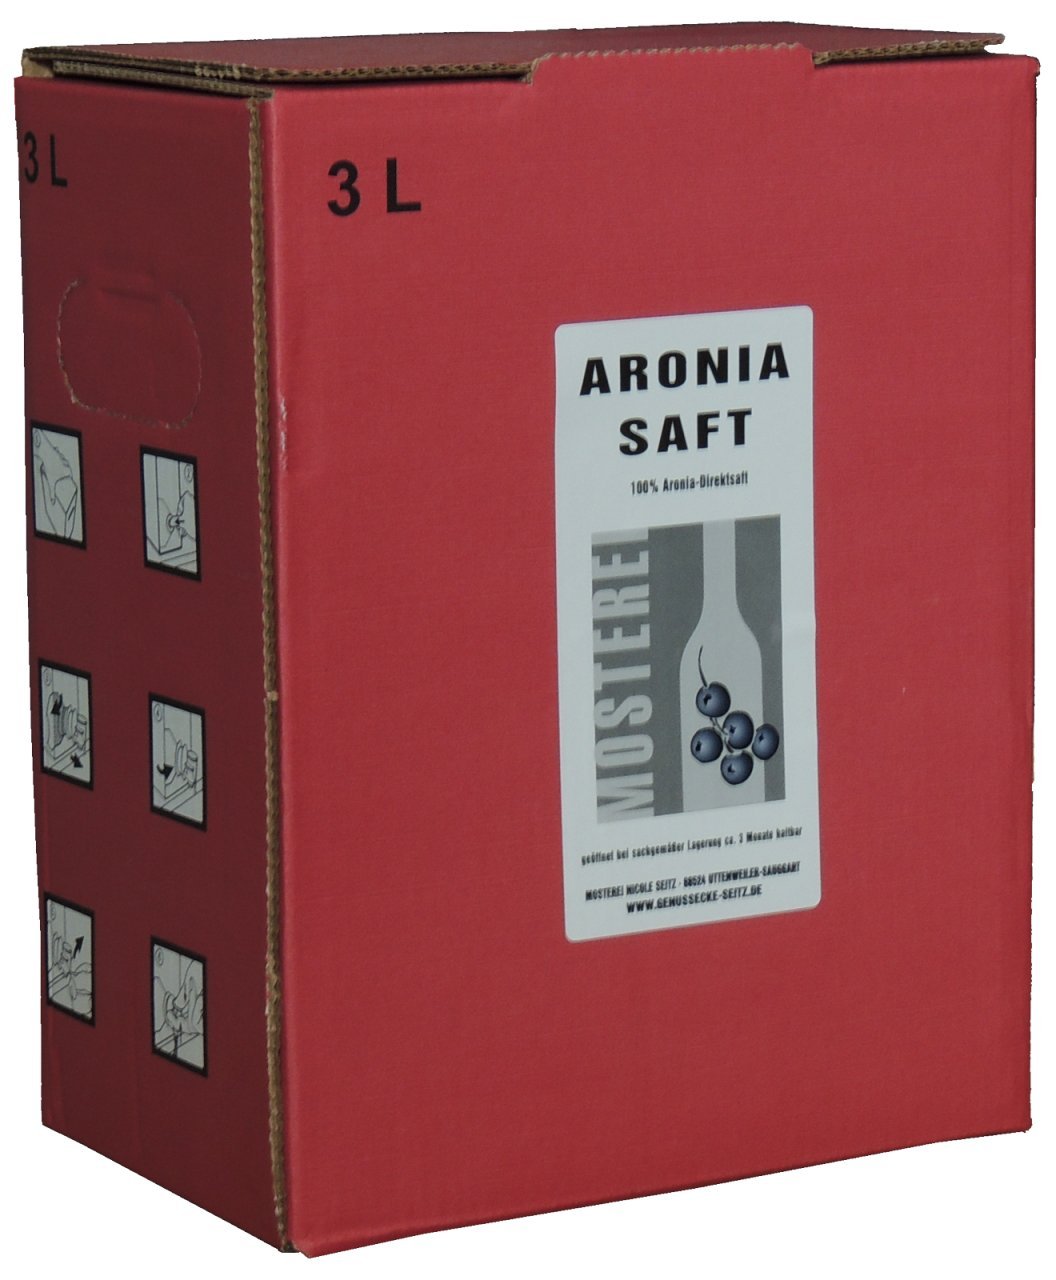 Aronia-Saft Direktsaft 2x 3L Bag in Box